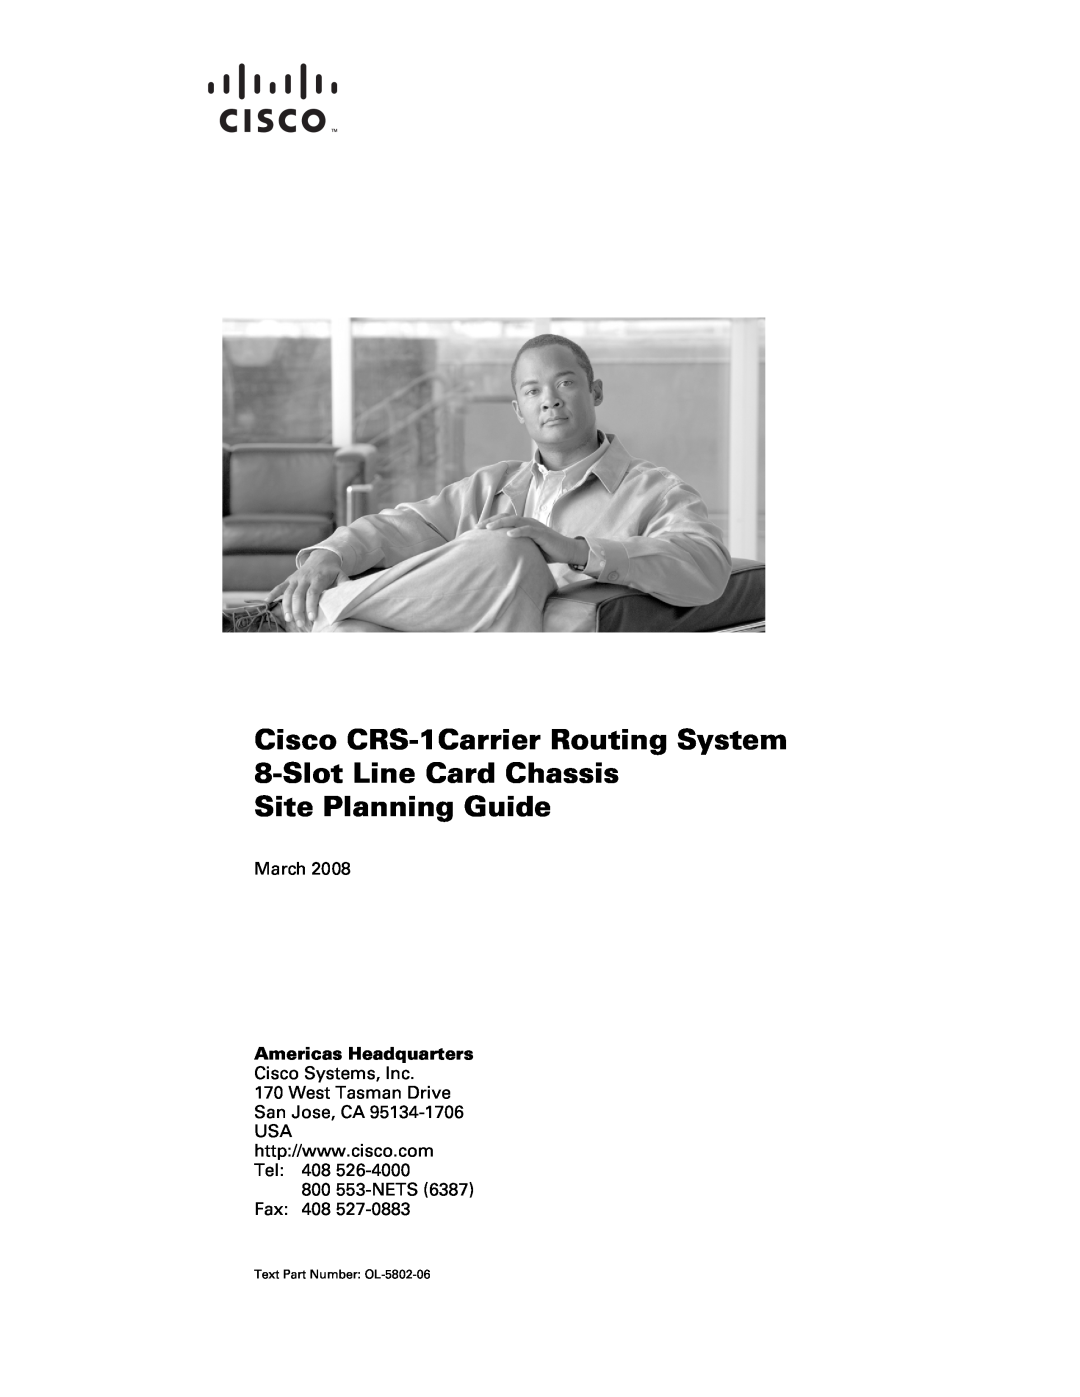 Cisco Systems CRS-1 manual Corporate Headquarters, June, Cisco Systems, Inc, West Tasman Drive San Jose, CA, Fax: 408 